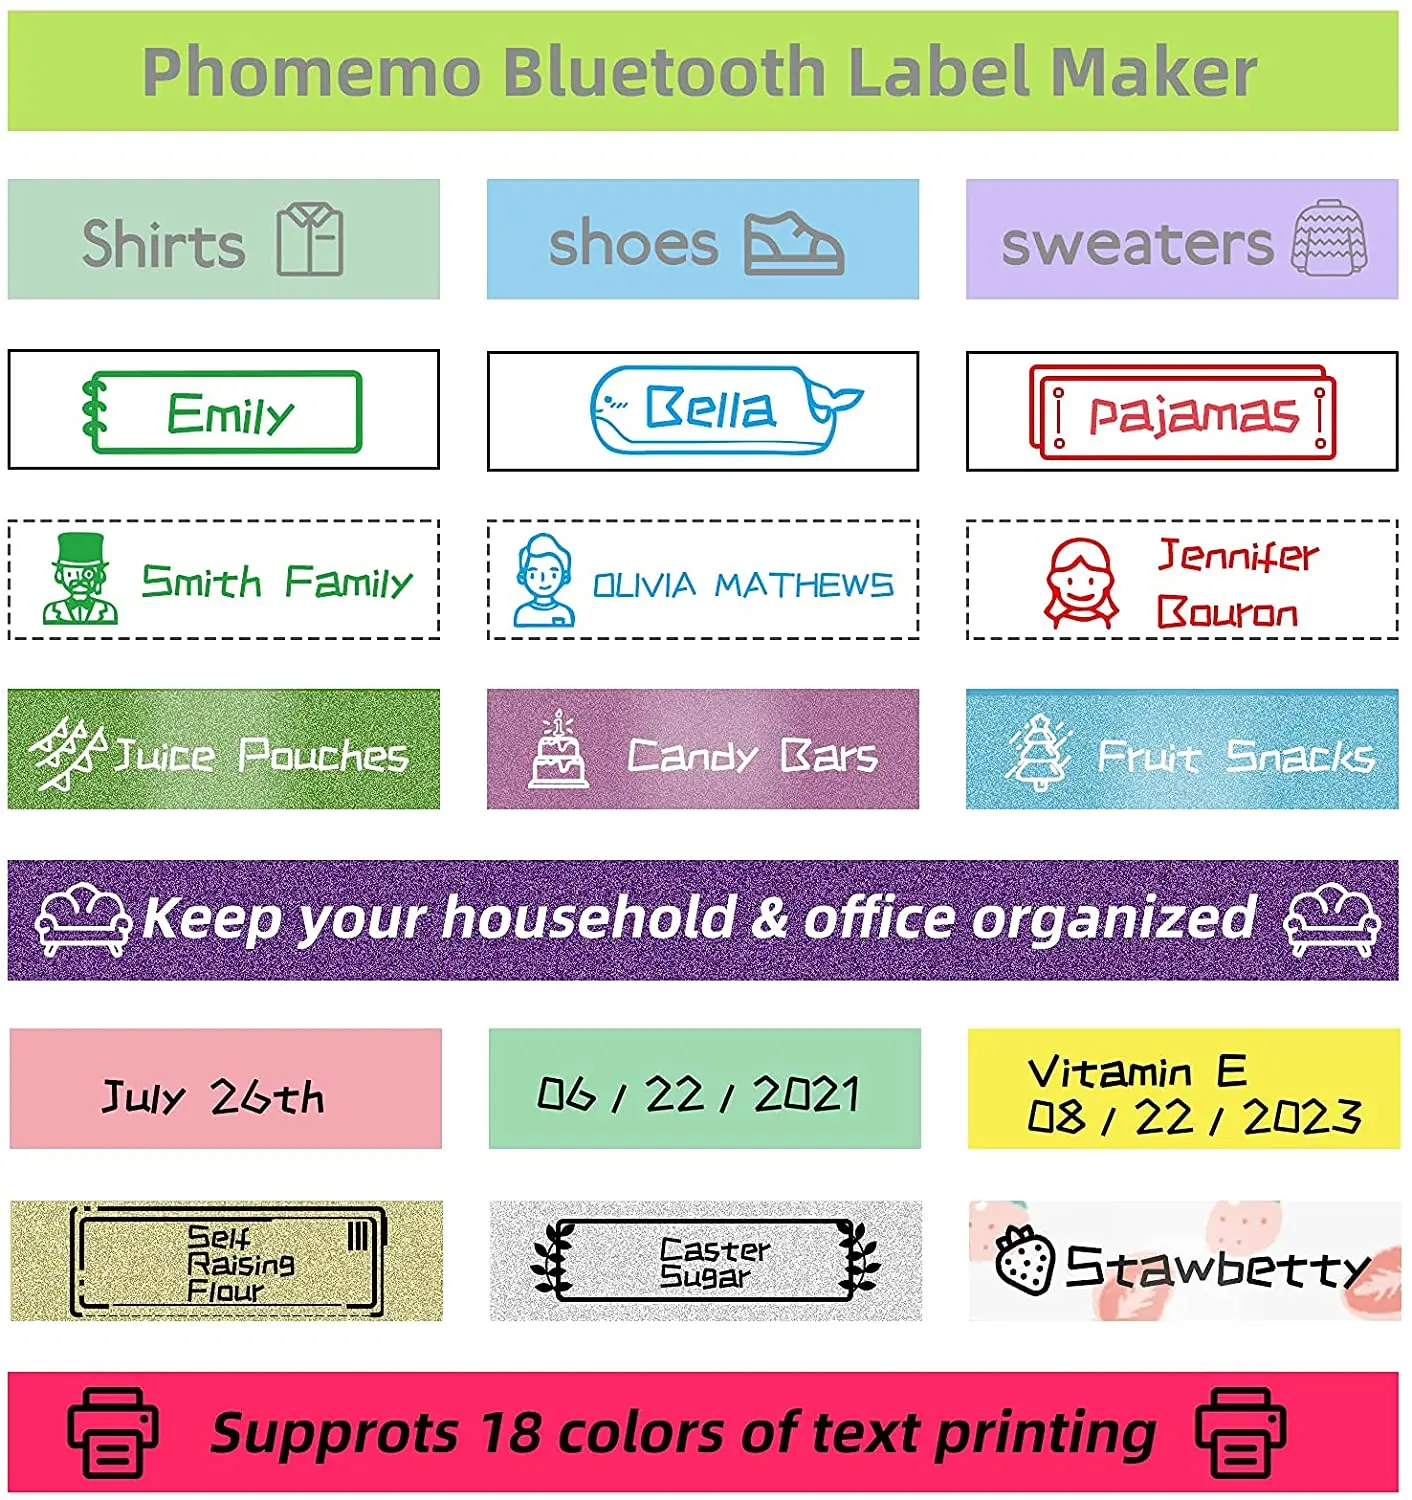 Label Tape for Phomemo P12 Label Maker Plastic Labeling Tape Compatible for Dymo Letratag Label Maker for 16952 12267 Refills images - 6